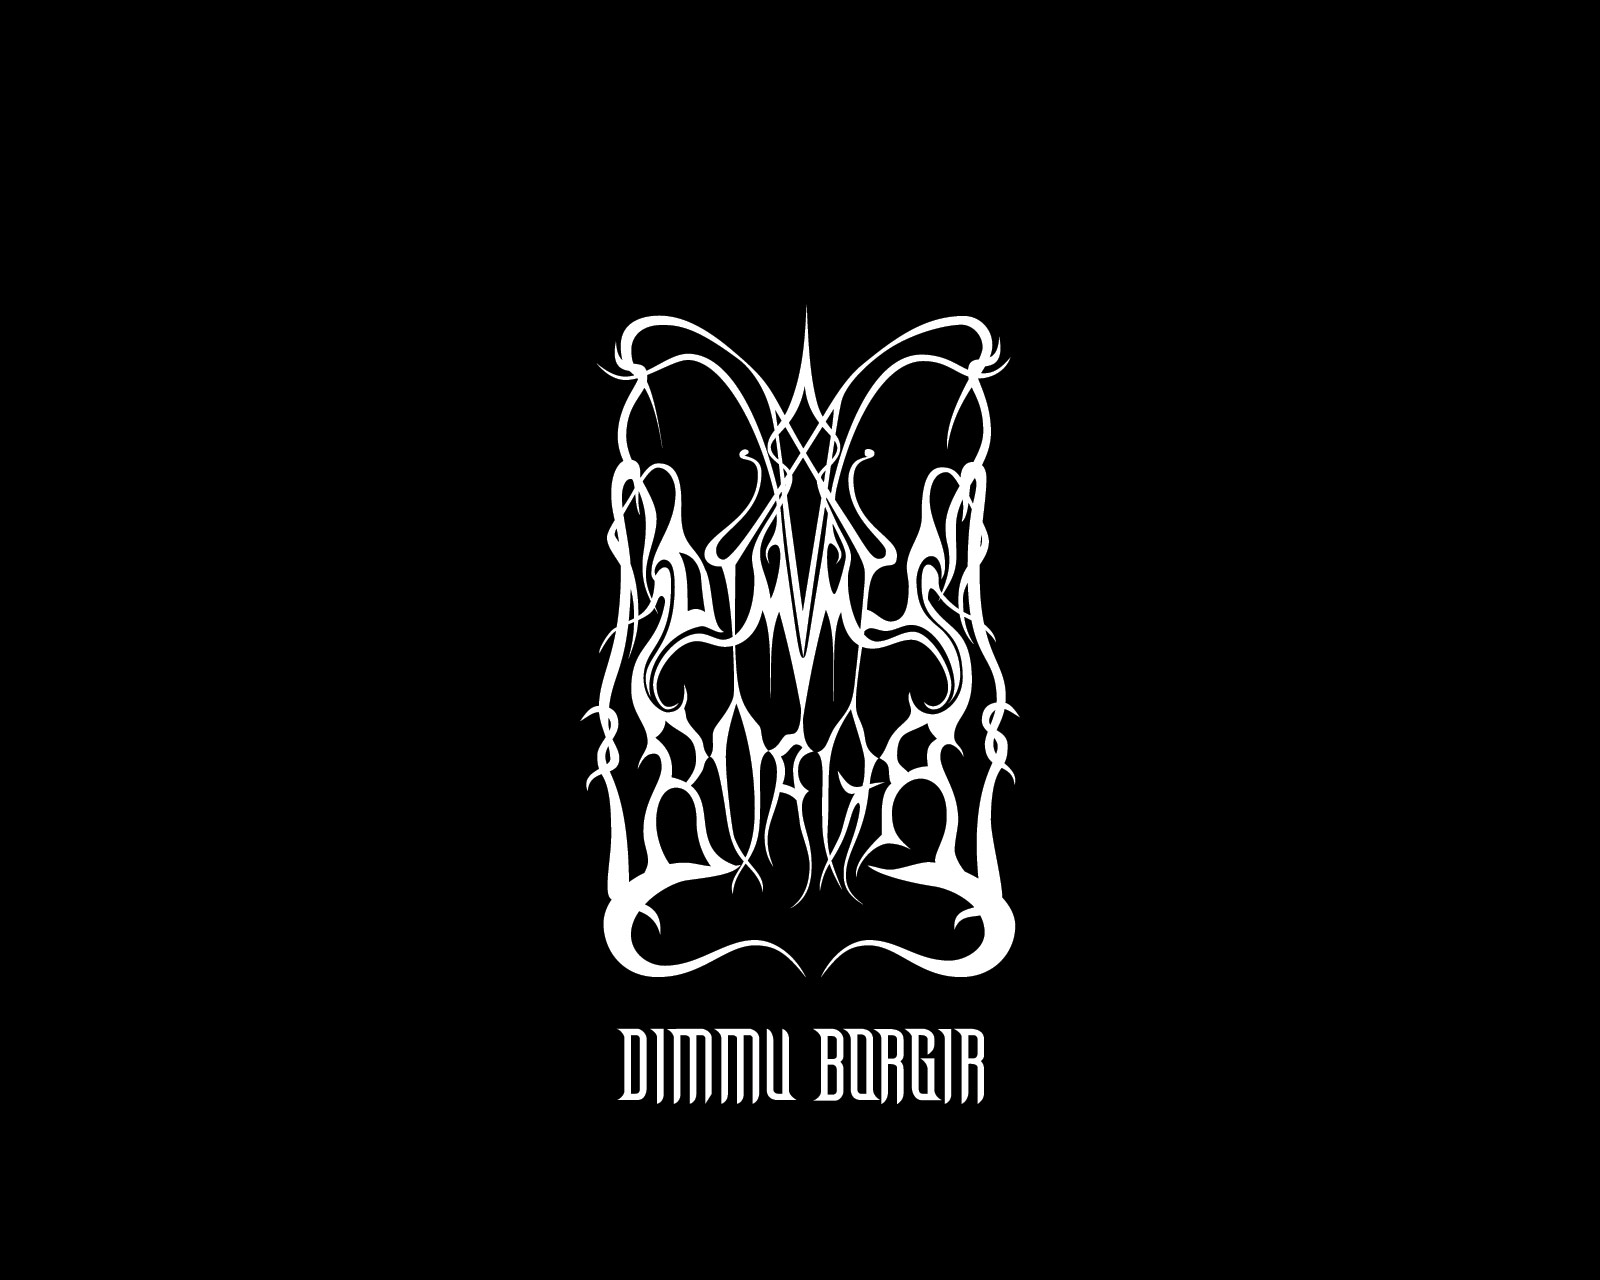 Dimmu Borgir Logo And Wallpaper Band Logos Rock Metal